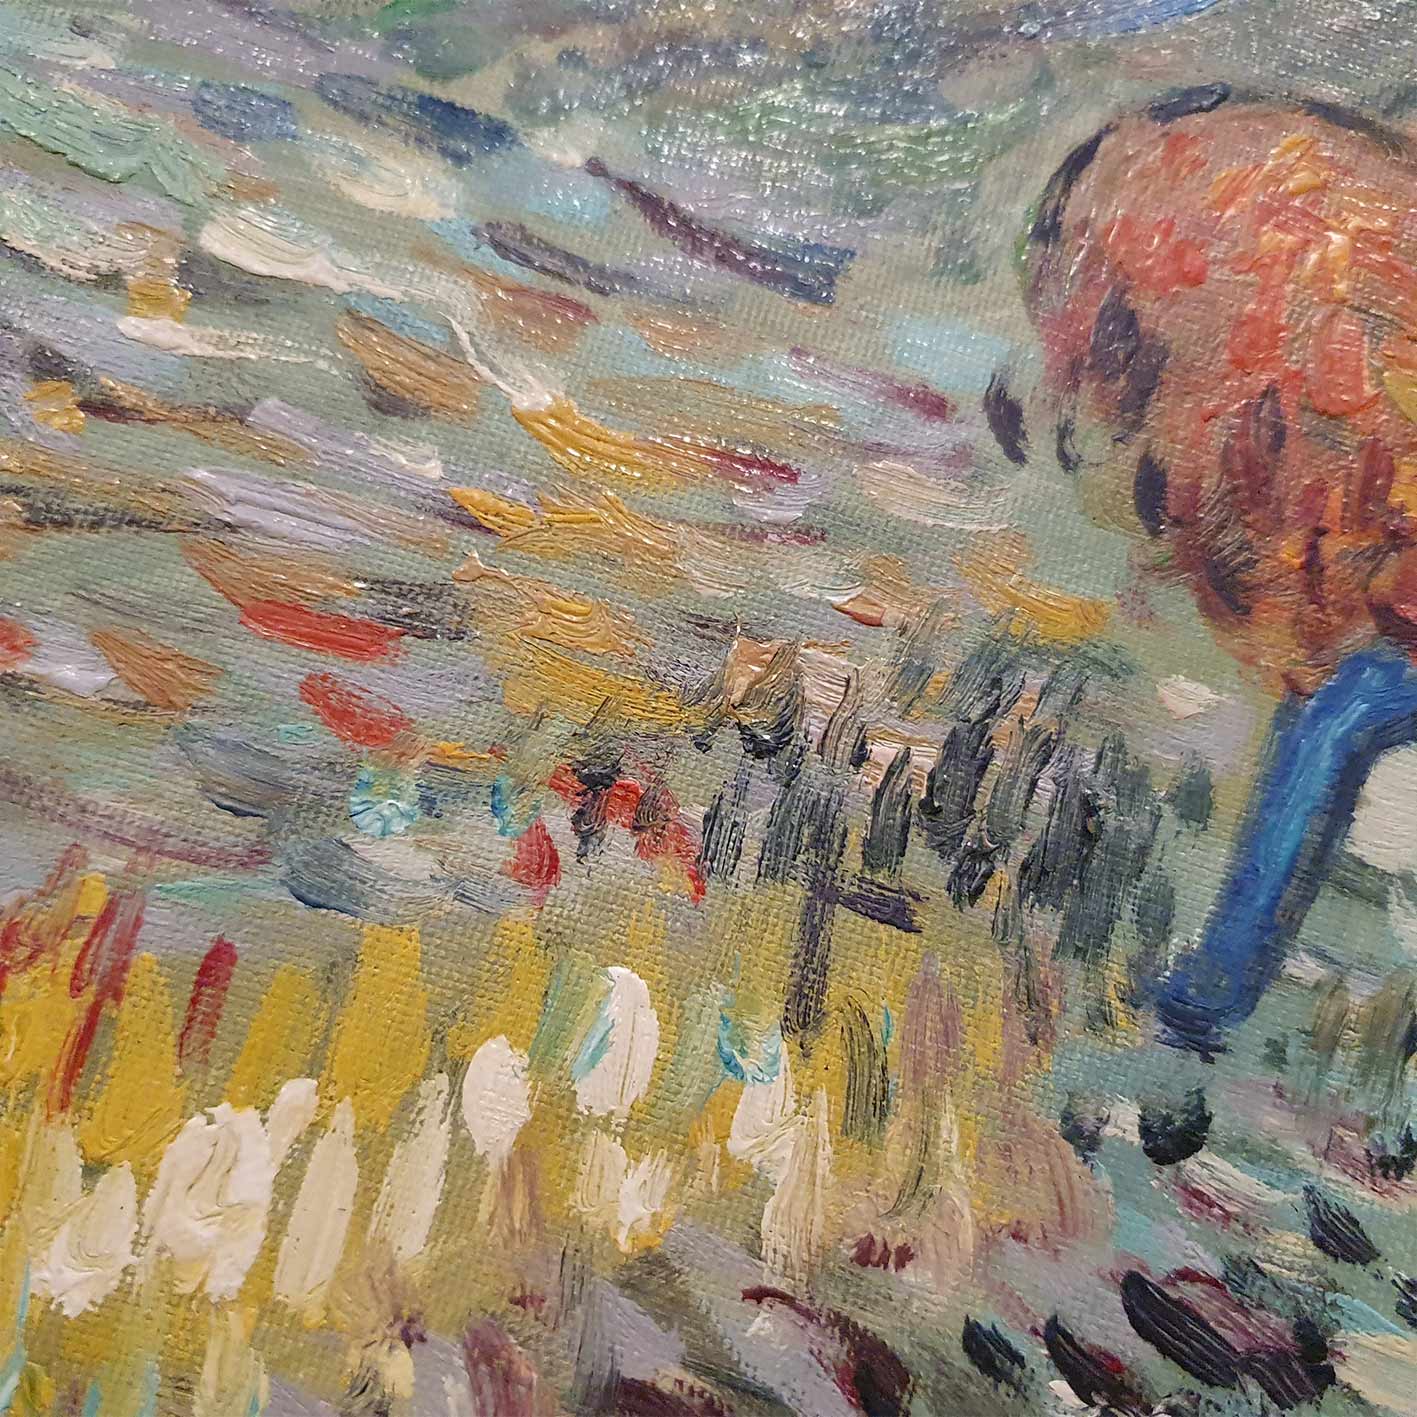 Van Gogh Agriculture painting 90x60 cm